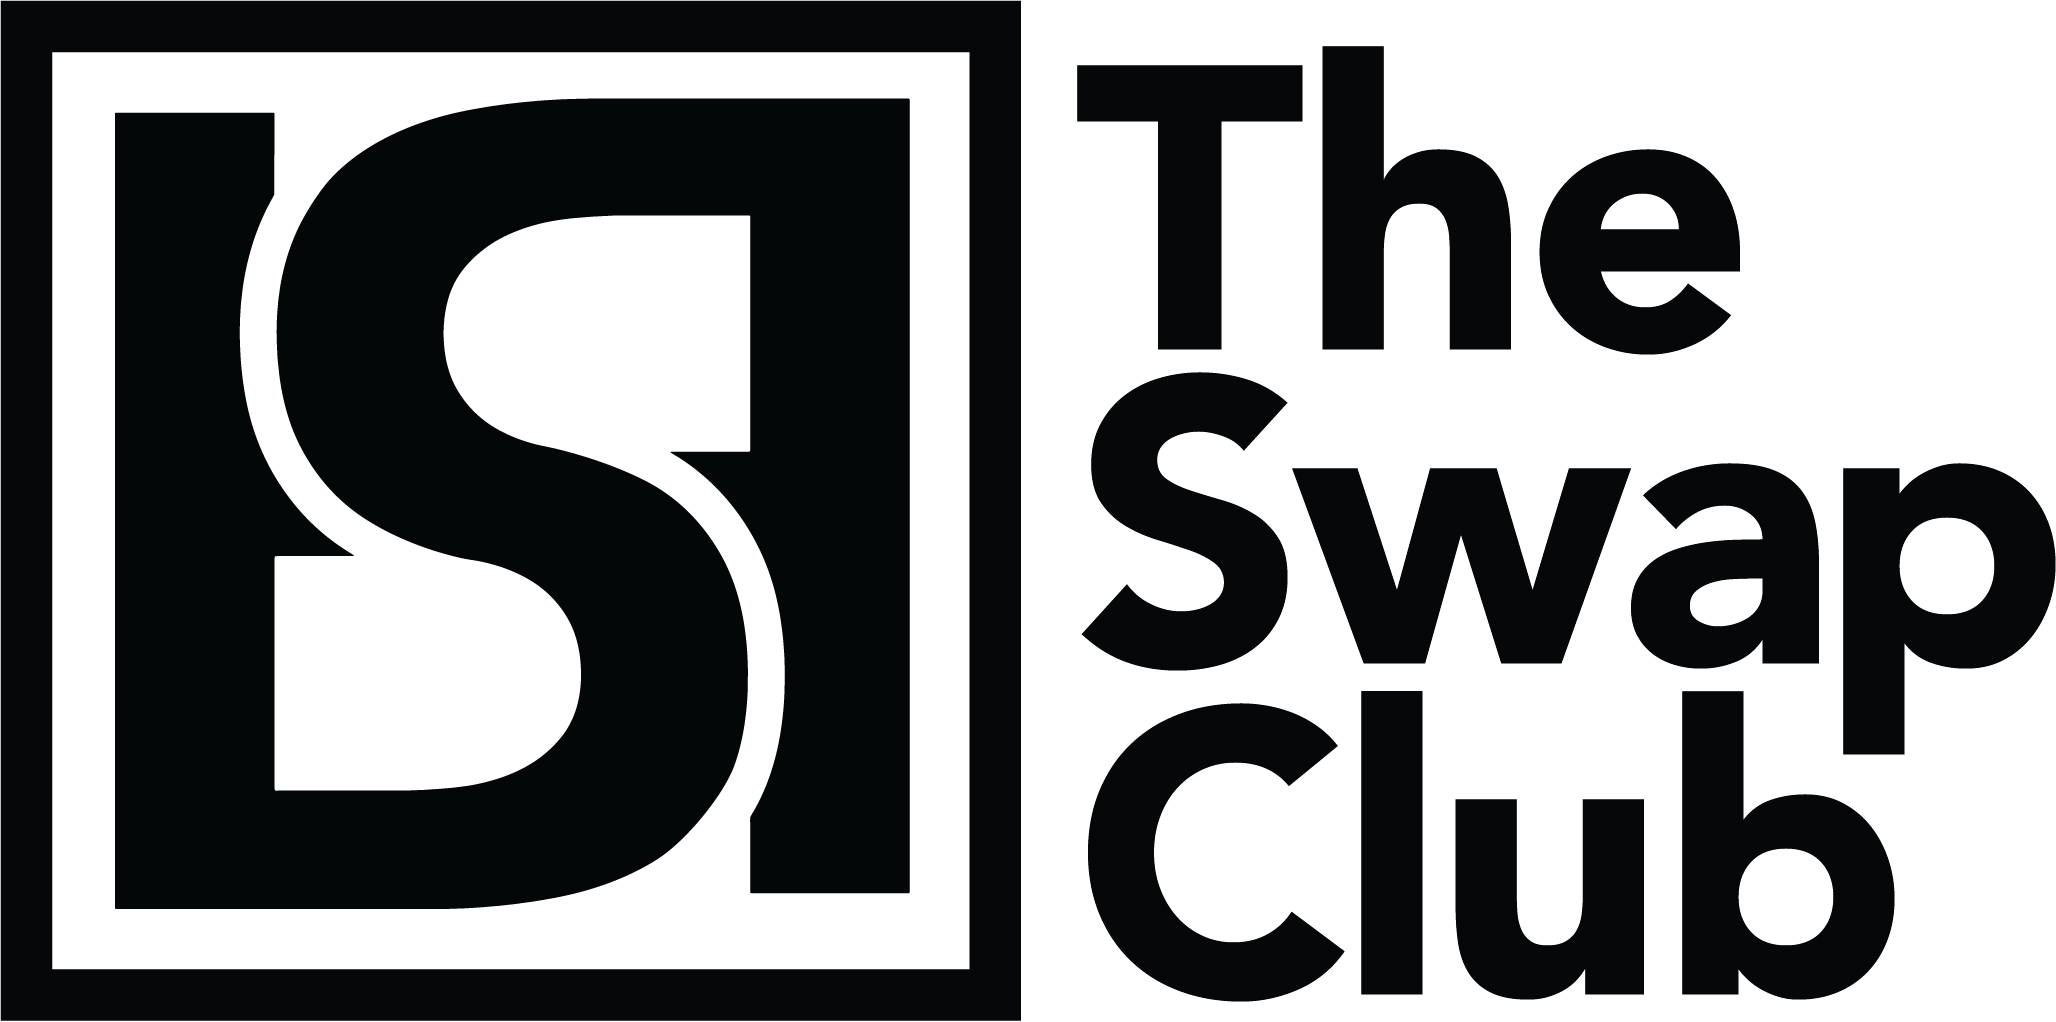 The Swap Club logo